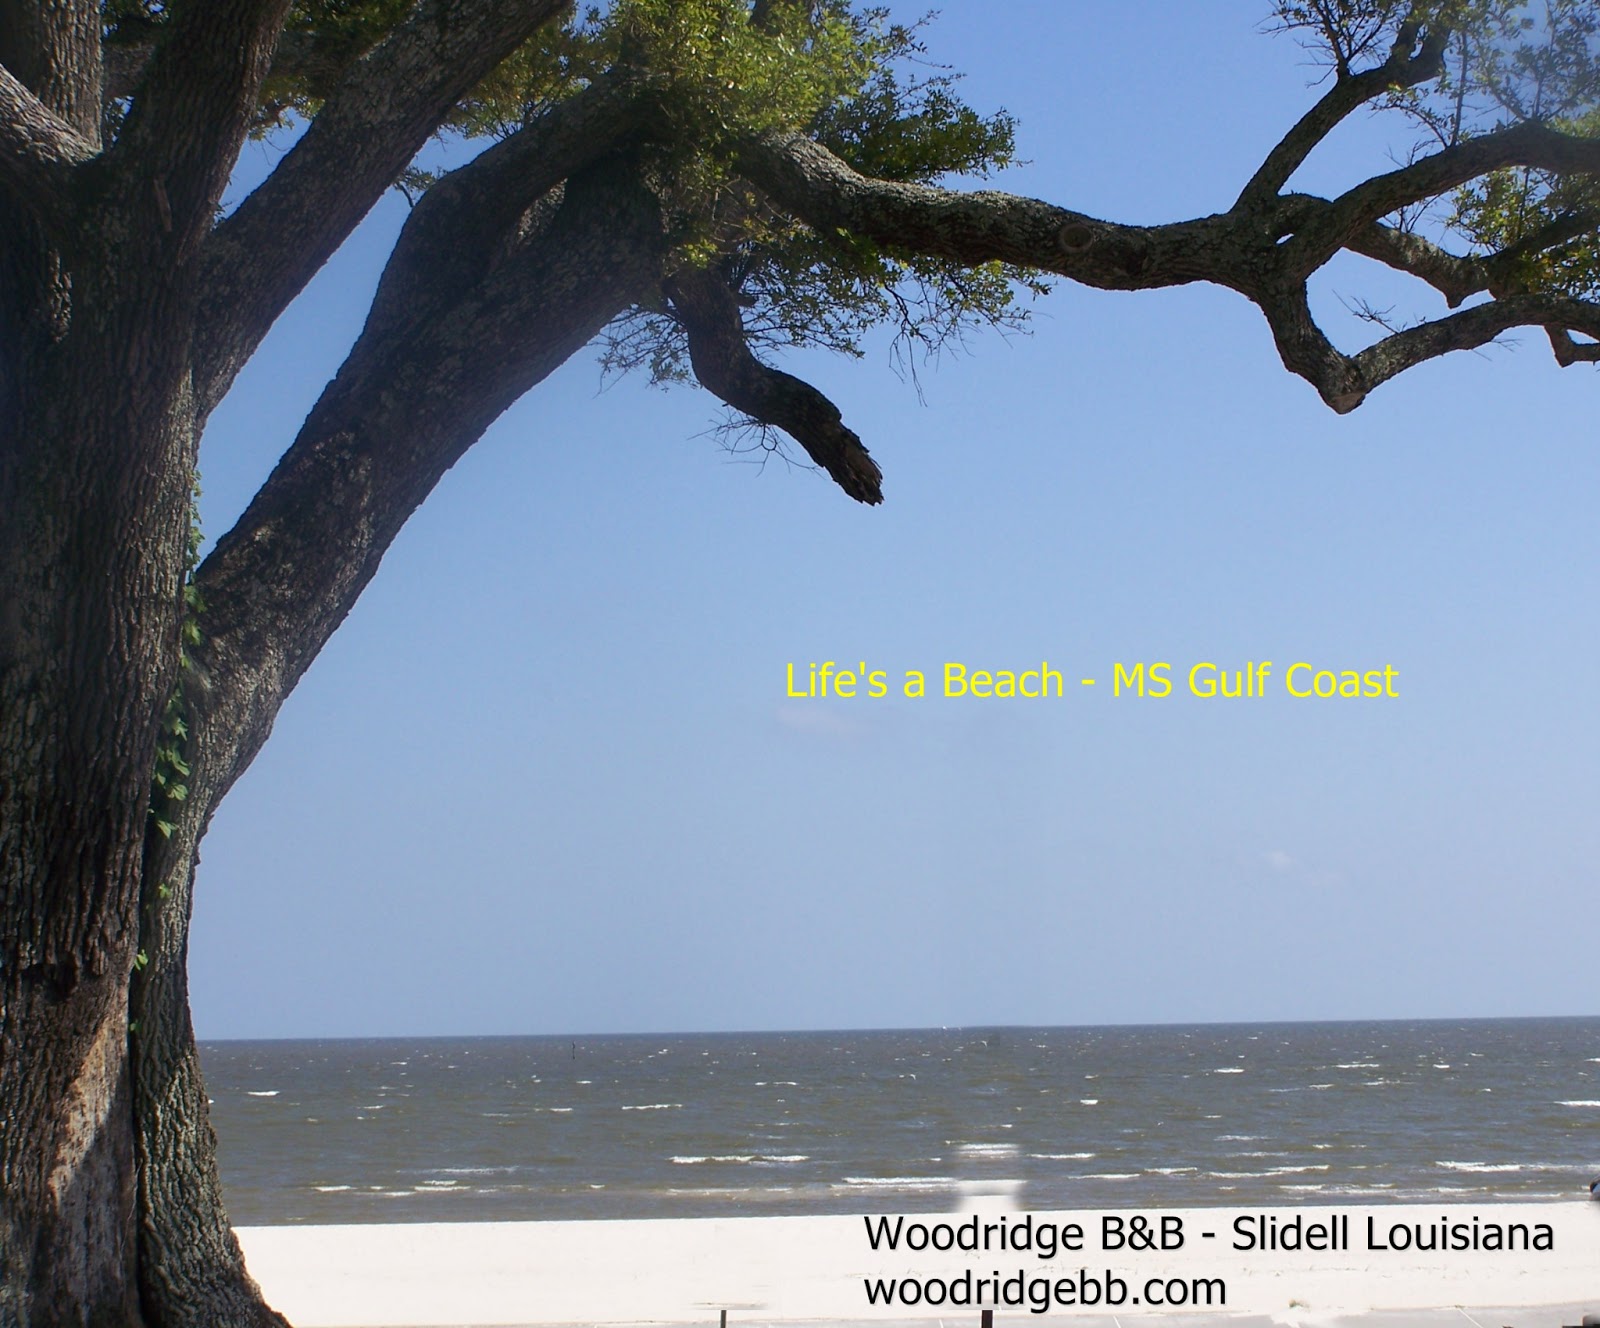 Woodridge Bed and Breakfast Slidell Louisiana Shootin